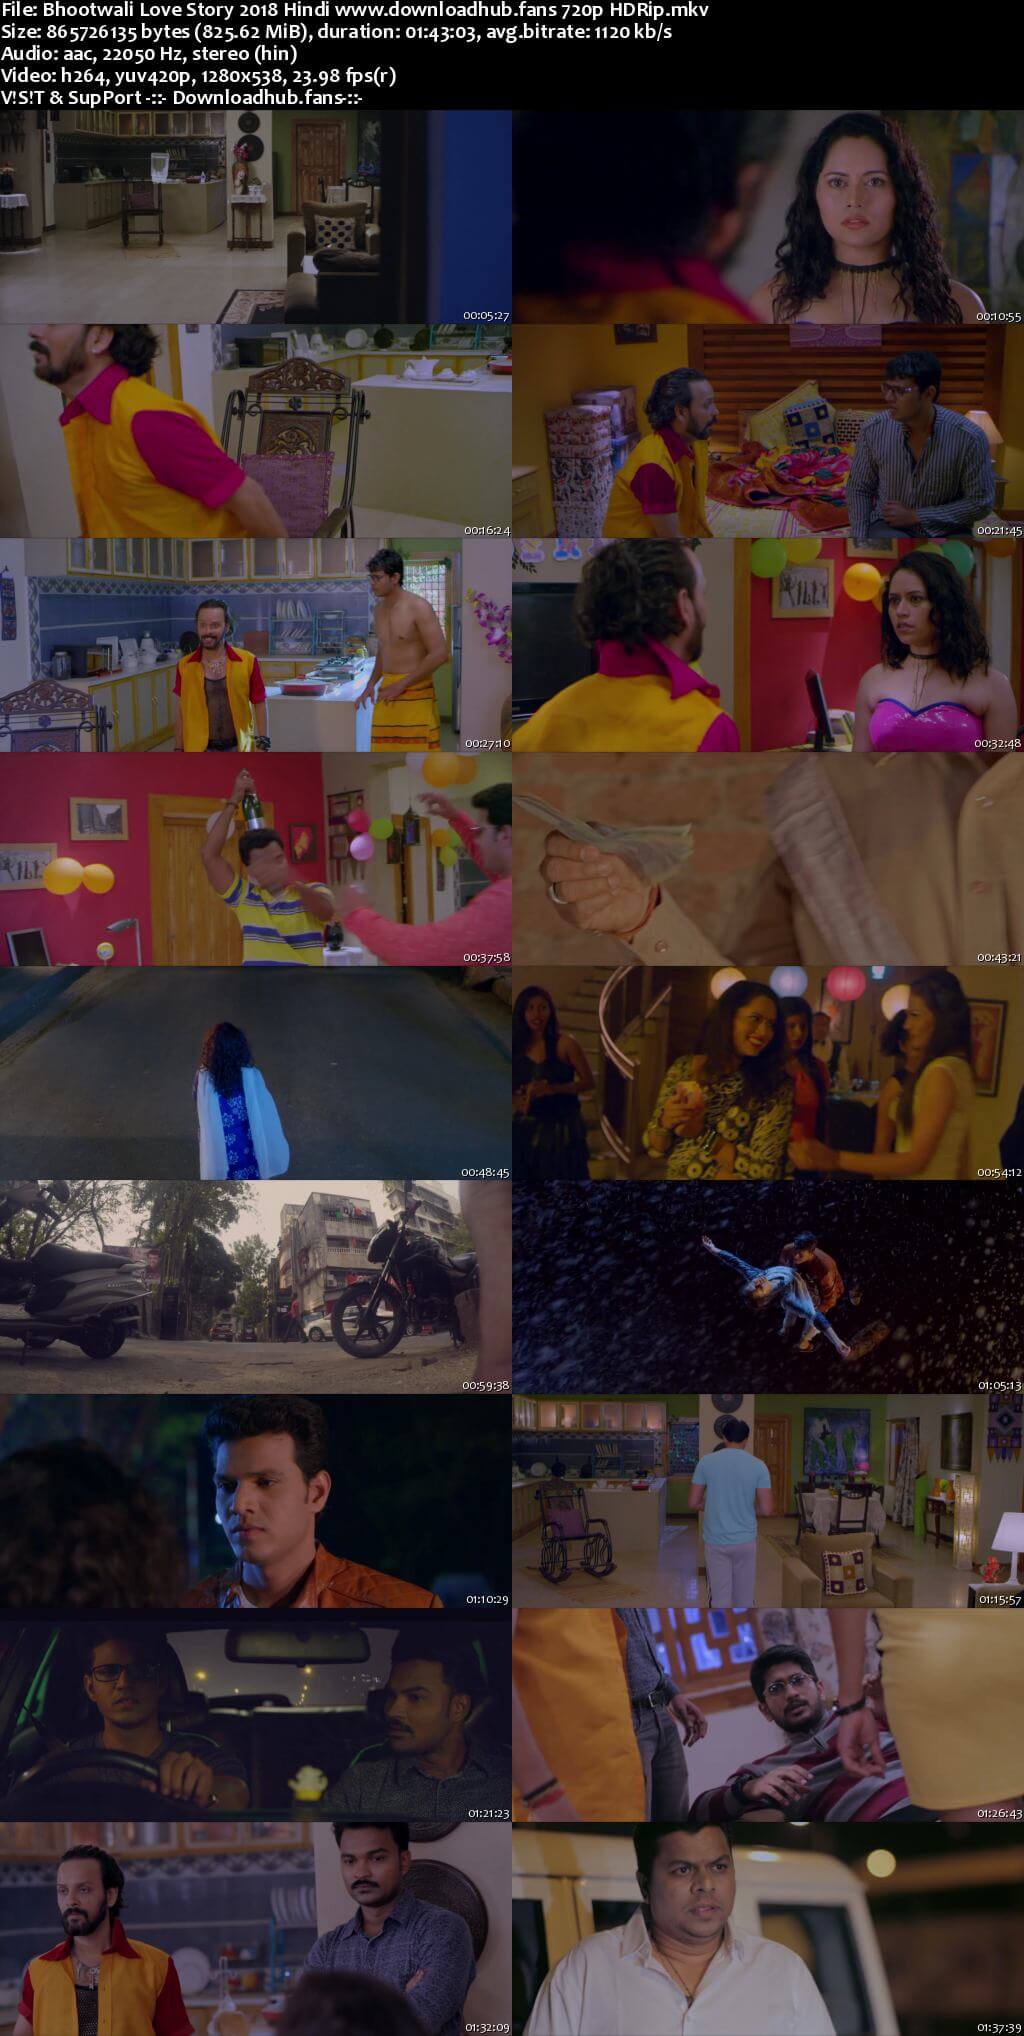 Bhootwali Love Story 2018 Hindi 720p HDRip x264